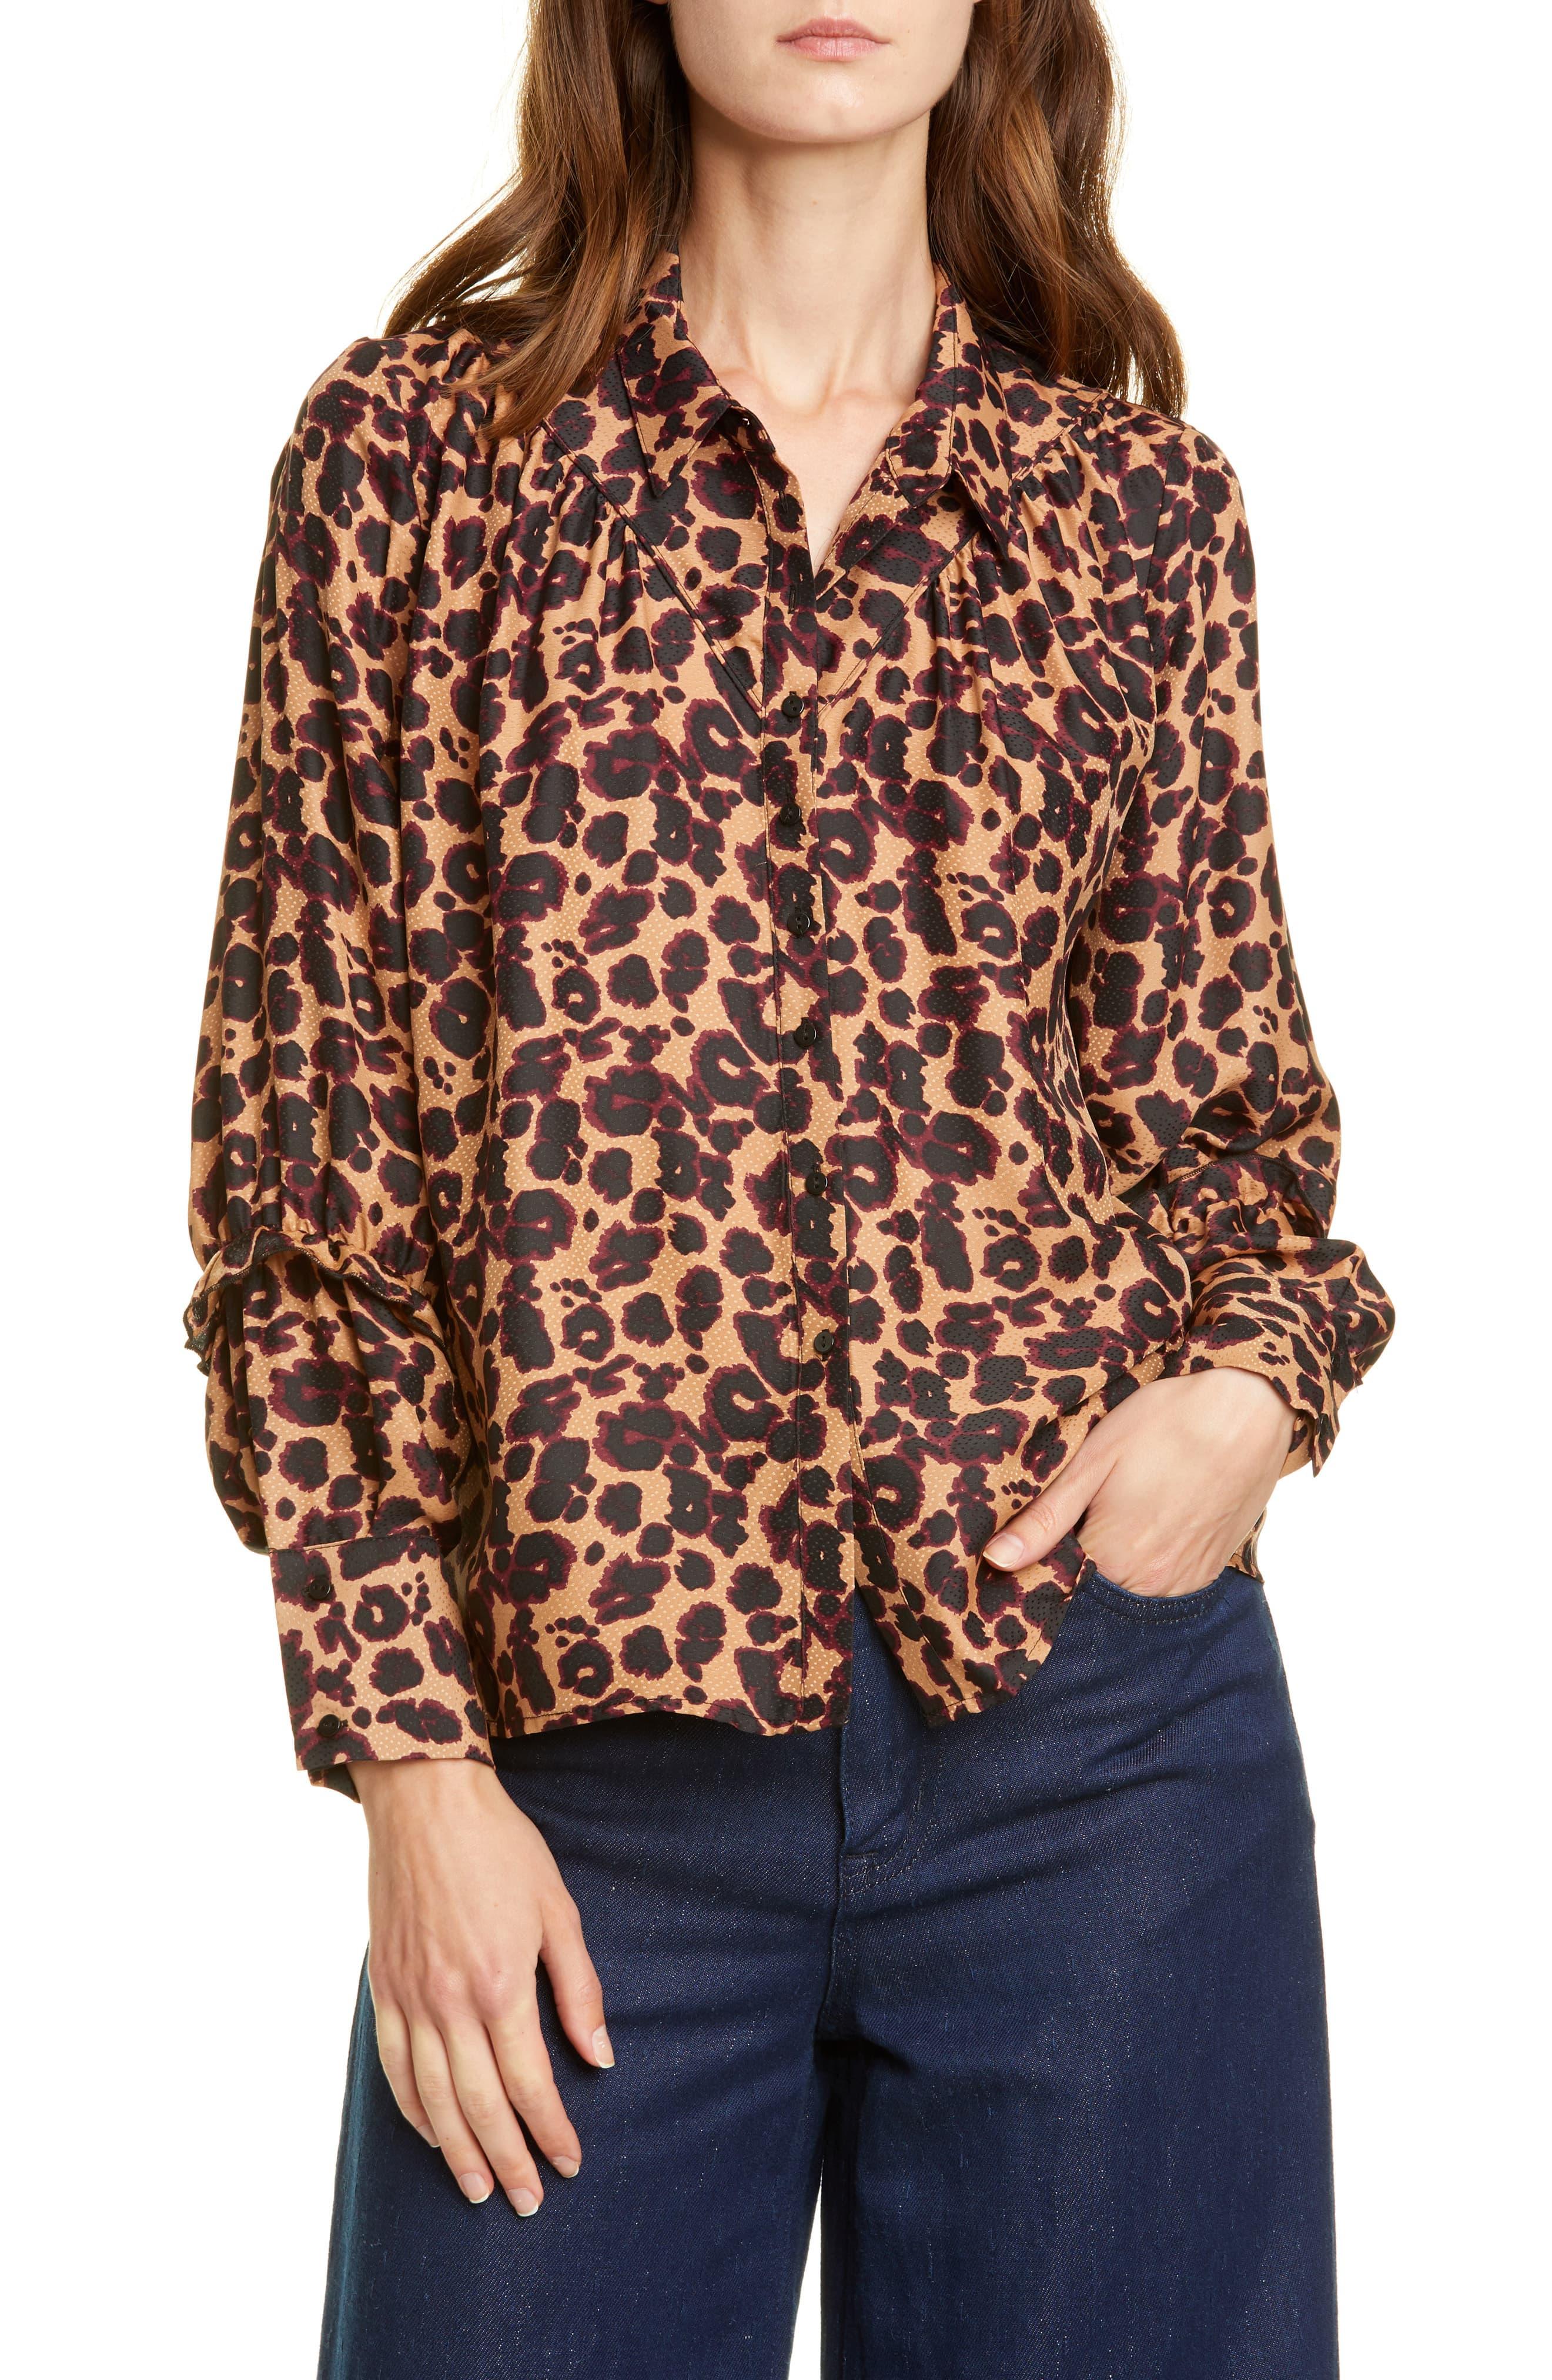 Ba&sh Tim Leopard Print Button-up Shirt in Camel (Brown) - Lyst